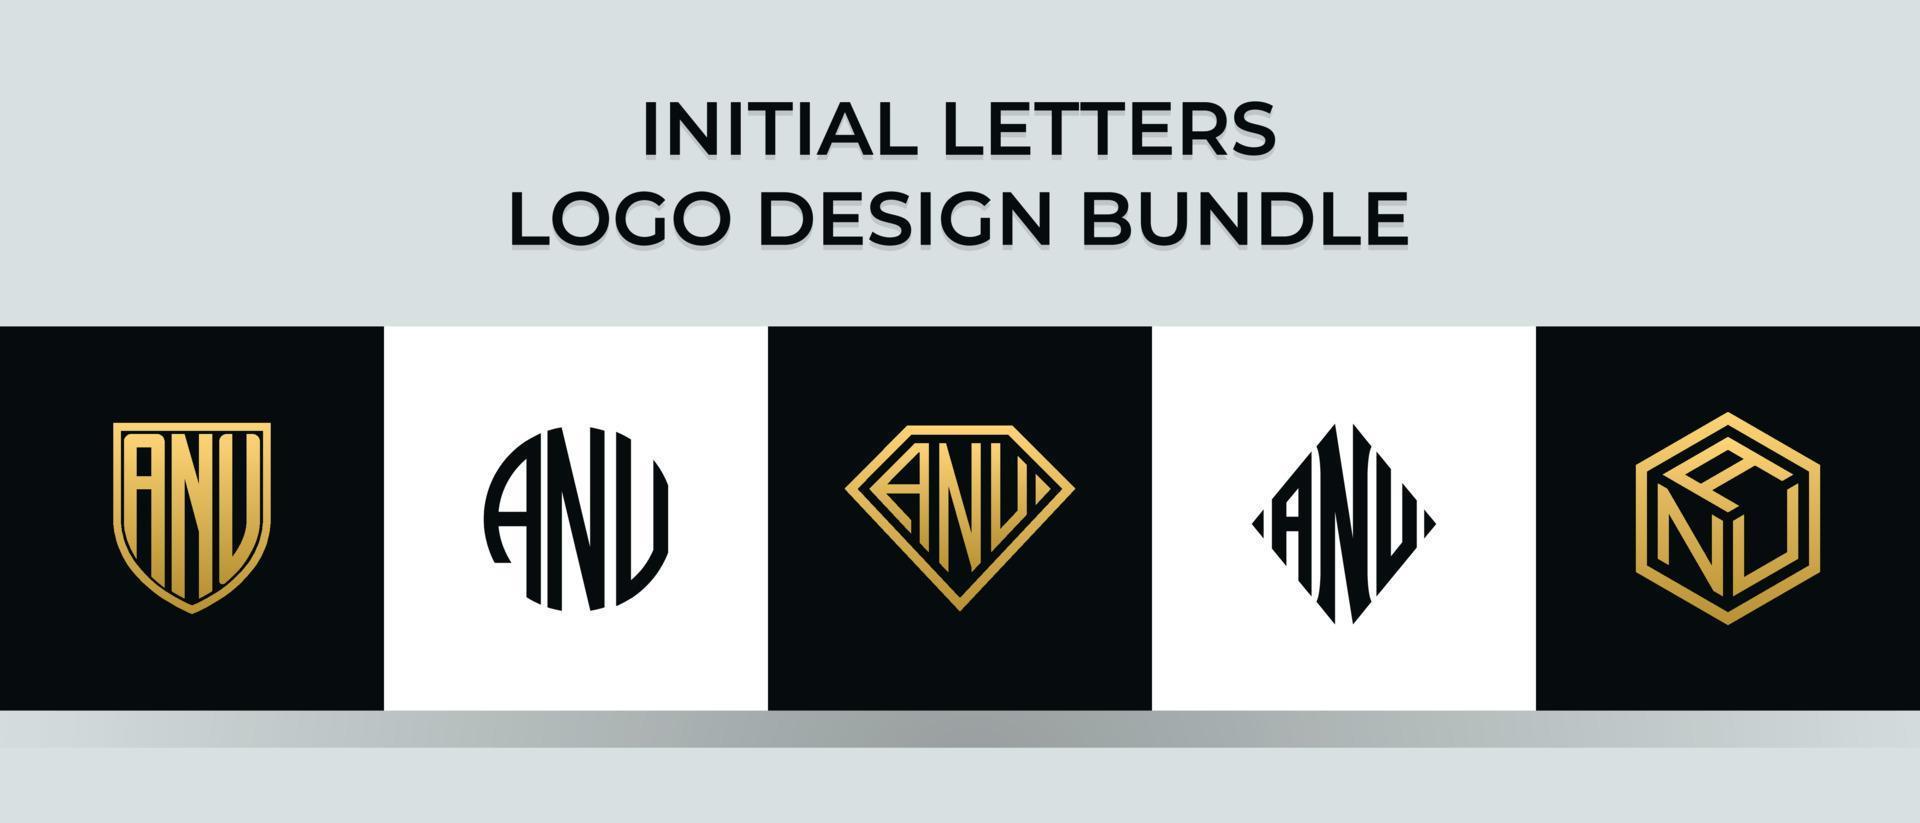 initiala bokstäver anu logotyp design bunt vektor